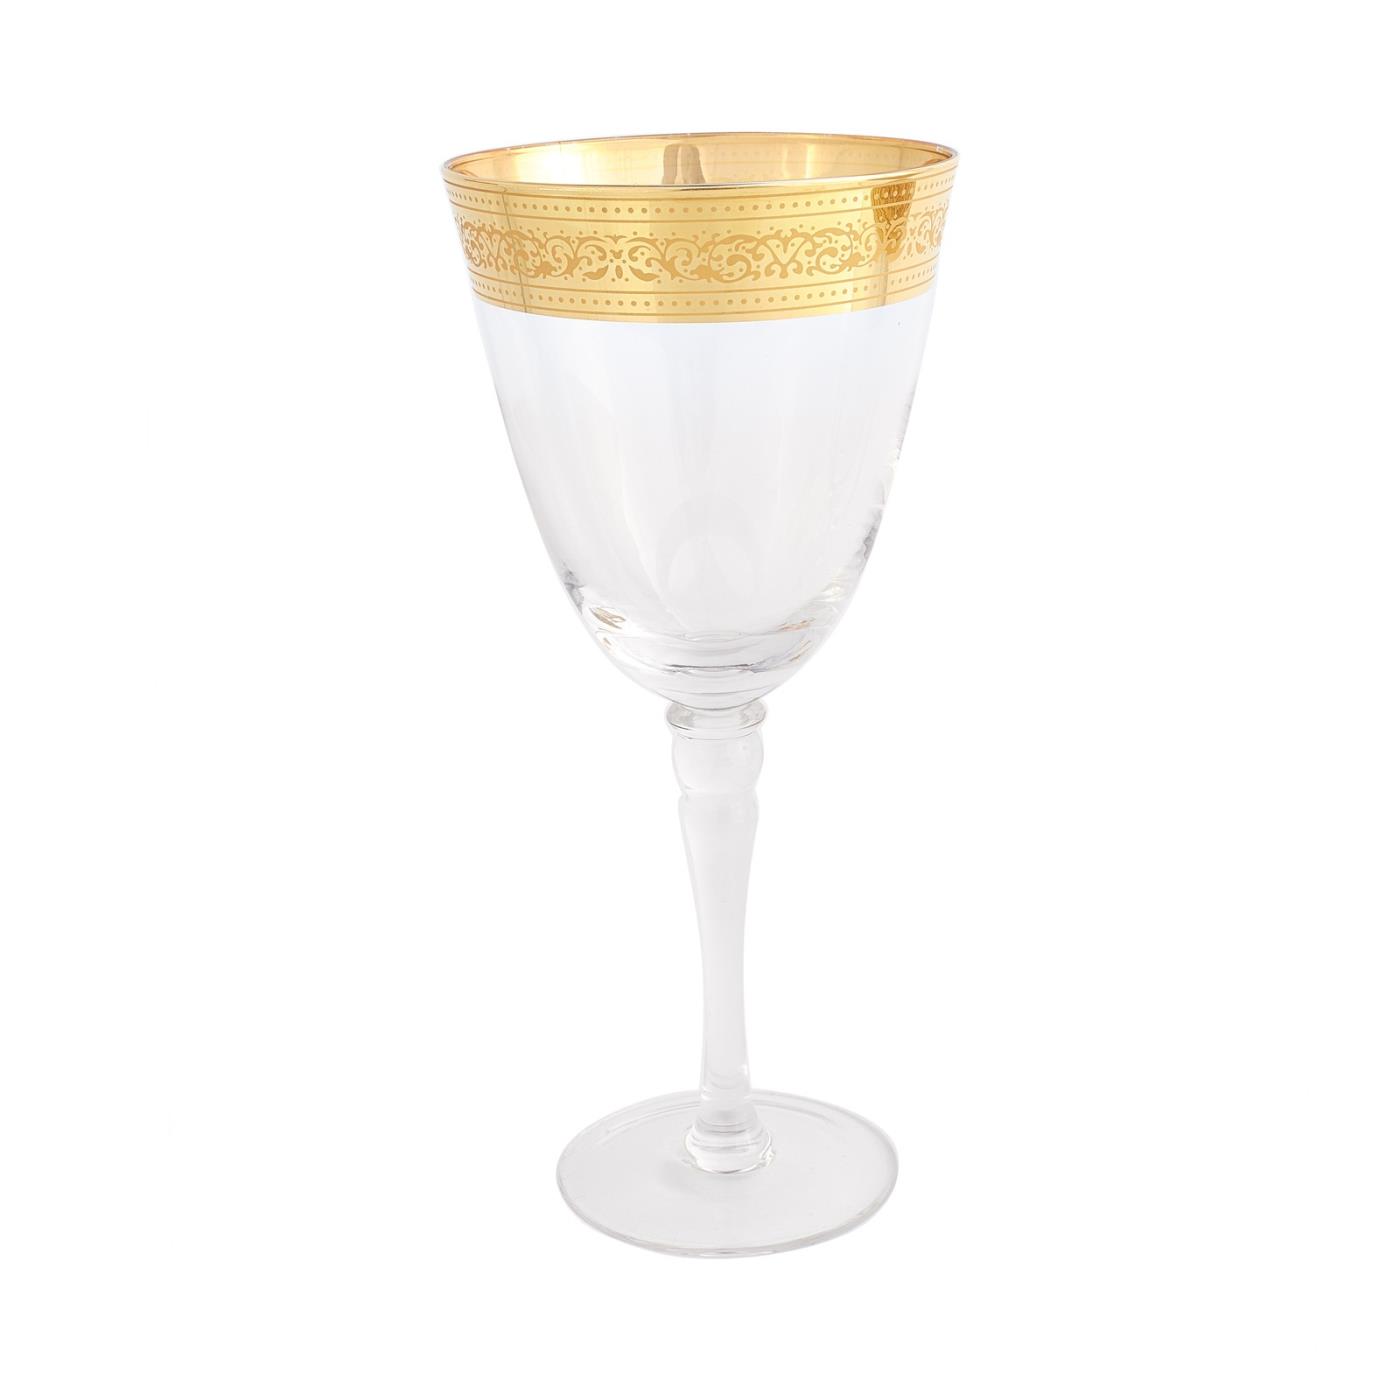 Majestic Gold - Red Wine Glass 10 oz